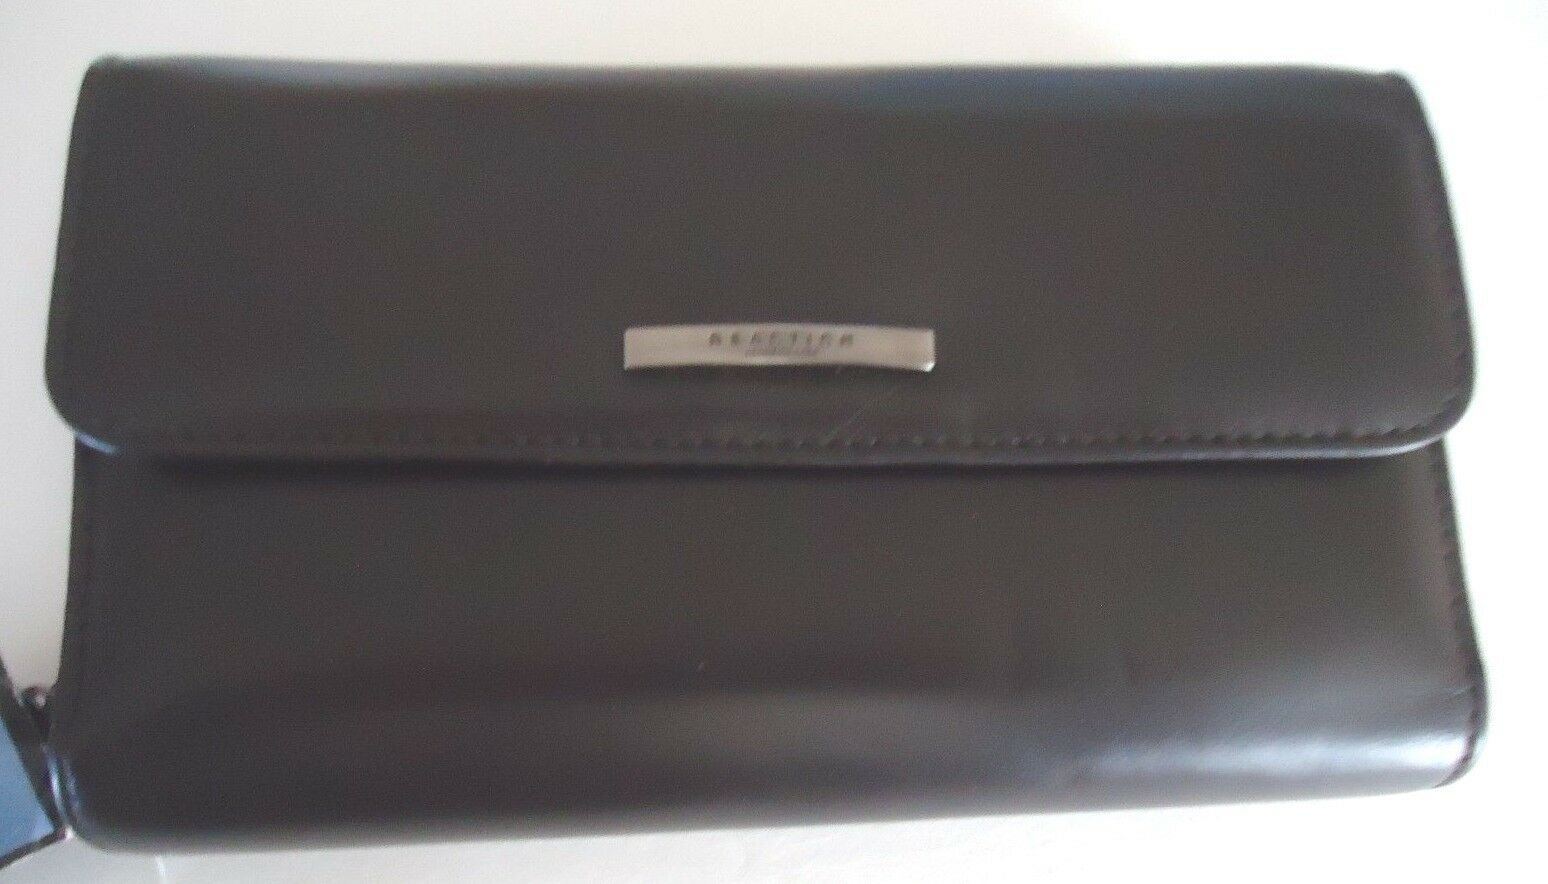 Kenneth Cole Reaction Ziparound Checkbook Wallet, Brown - $25.98